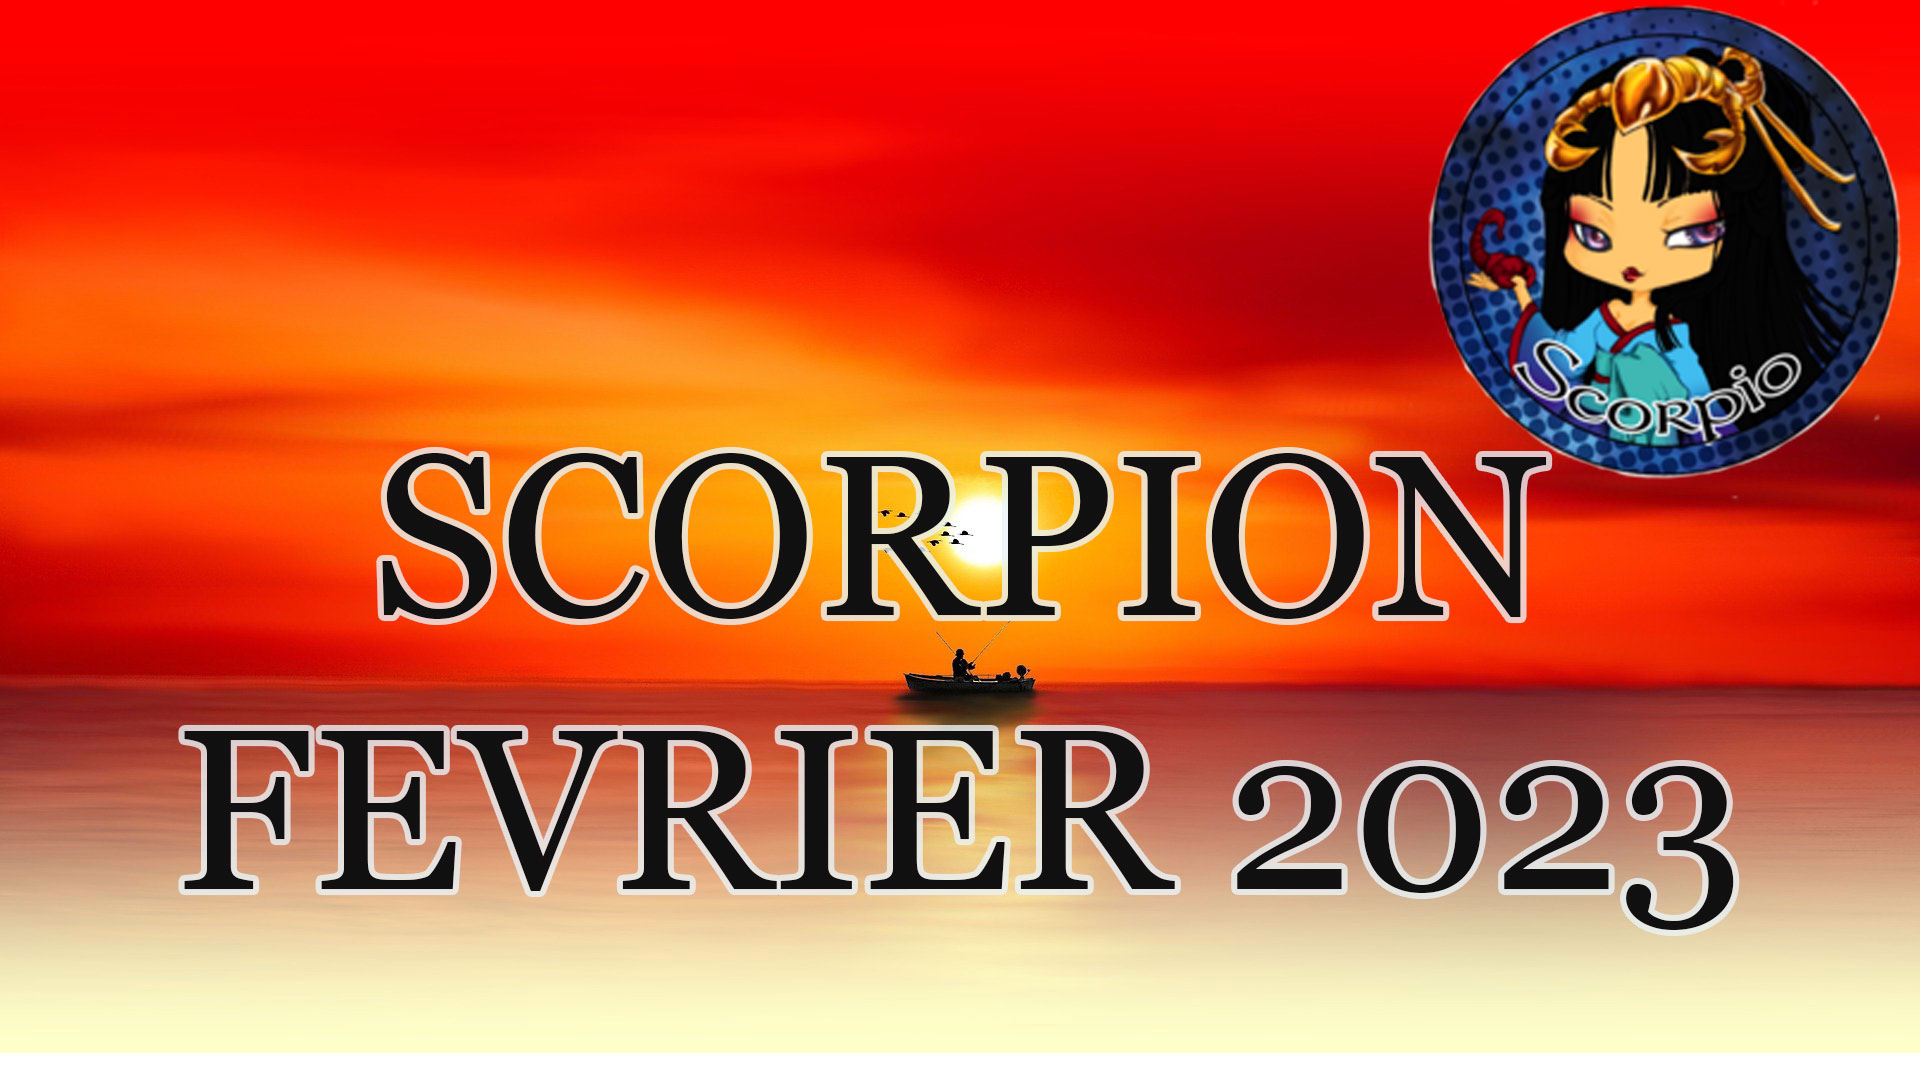 scorpion fevrier 2023